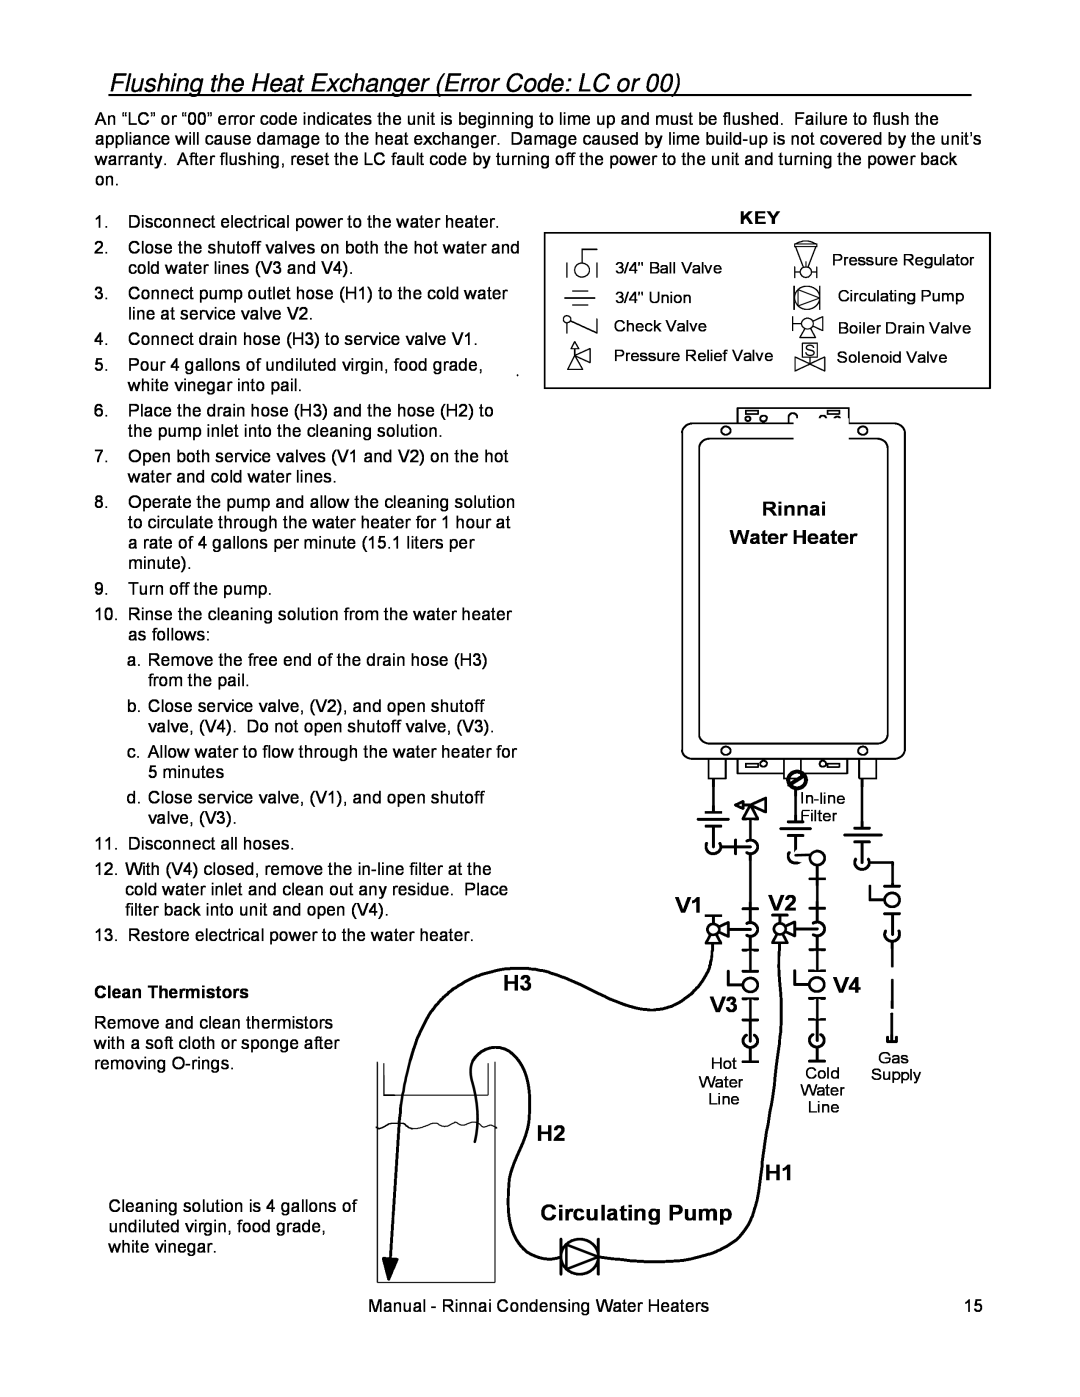 Rinnai RC80E Flushing the Heat Exchanger Error Code LC or, H2 H1 Circulating Pump, Rinnai Water Heater, Clean Thermistors 